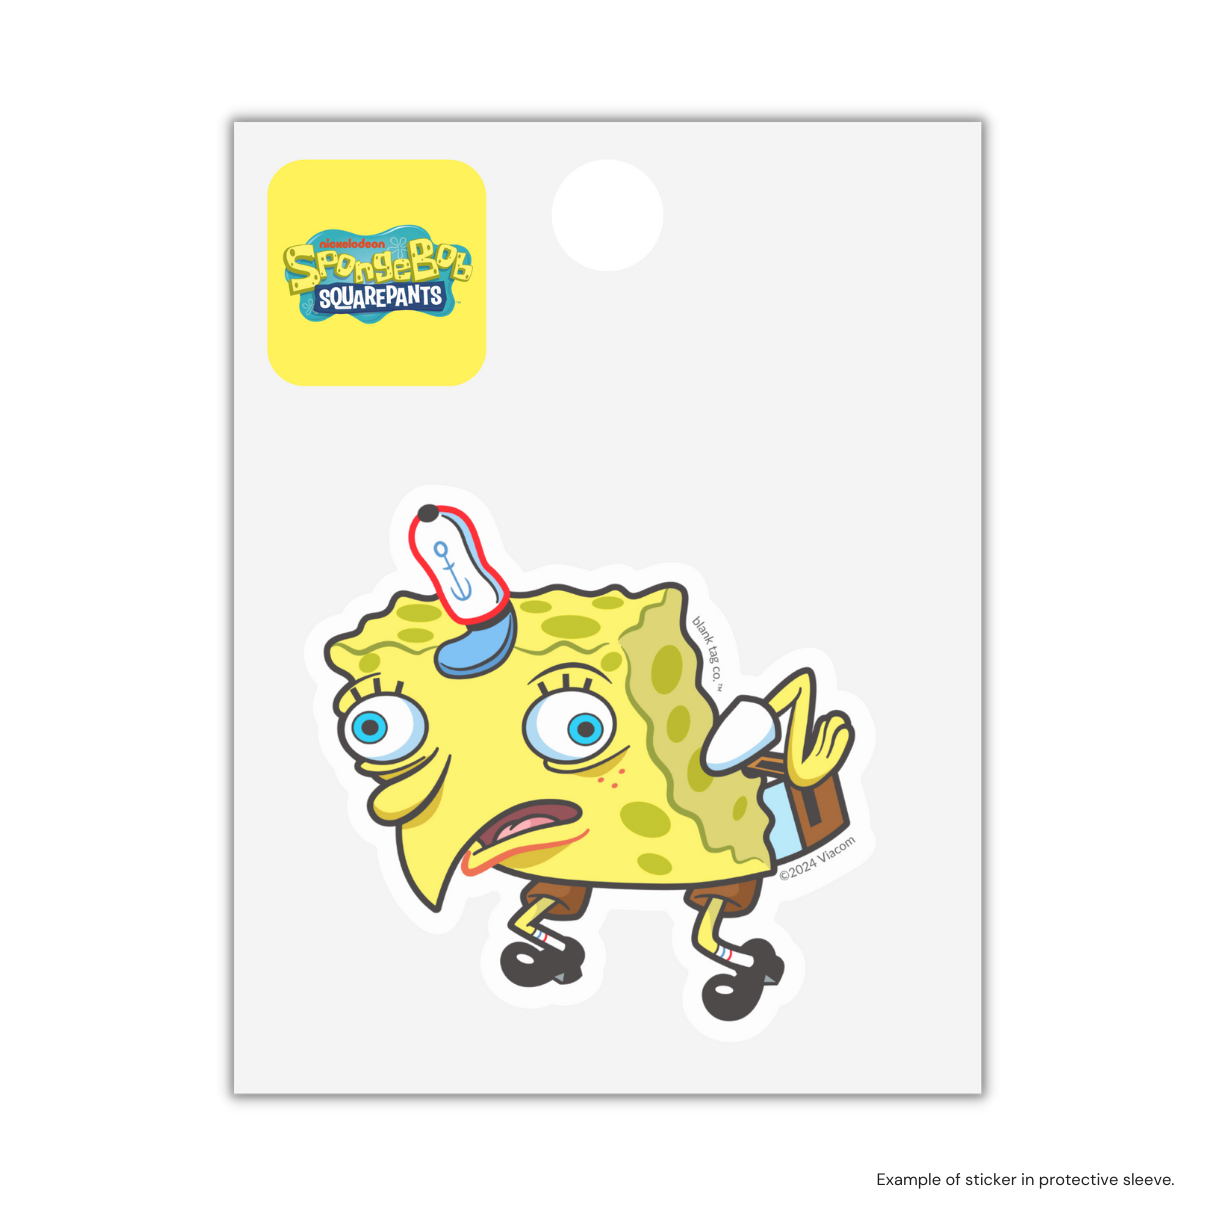 The Mocking SpongeBob Meme Sticker